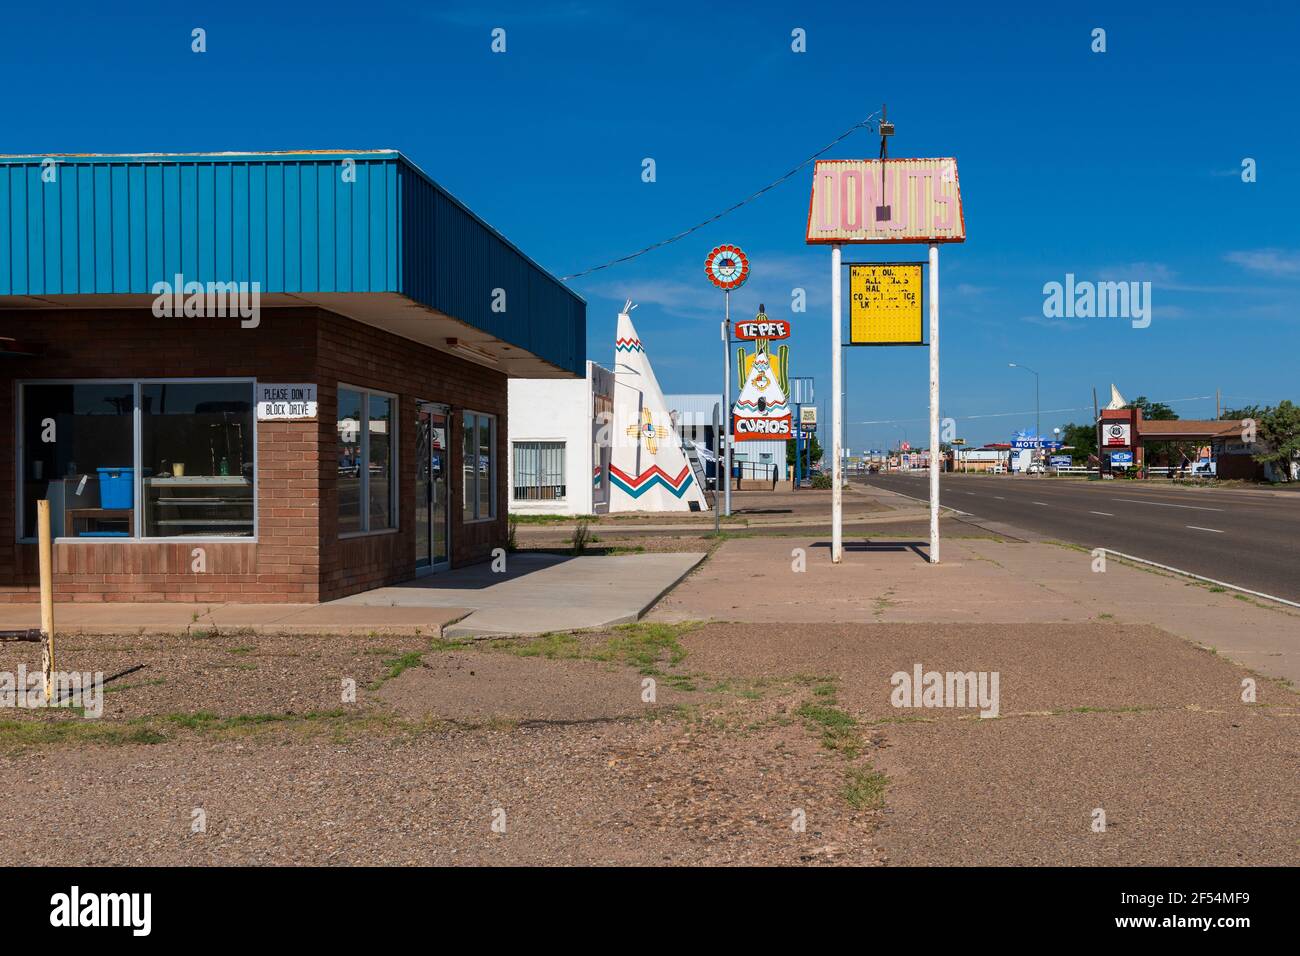 Tucumcari, New Mexico - July 9, 2014: View of the historic US Route 66, in the city of Tucumcari, New Mexico. Stock Photo